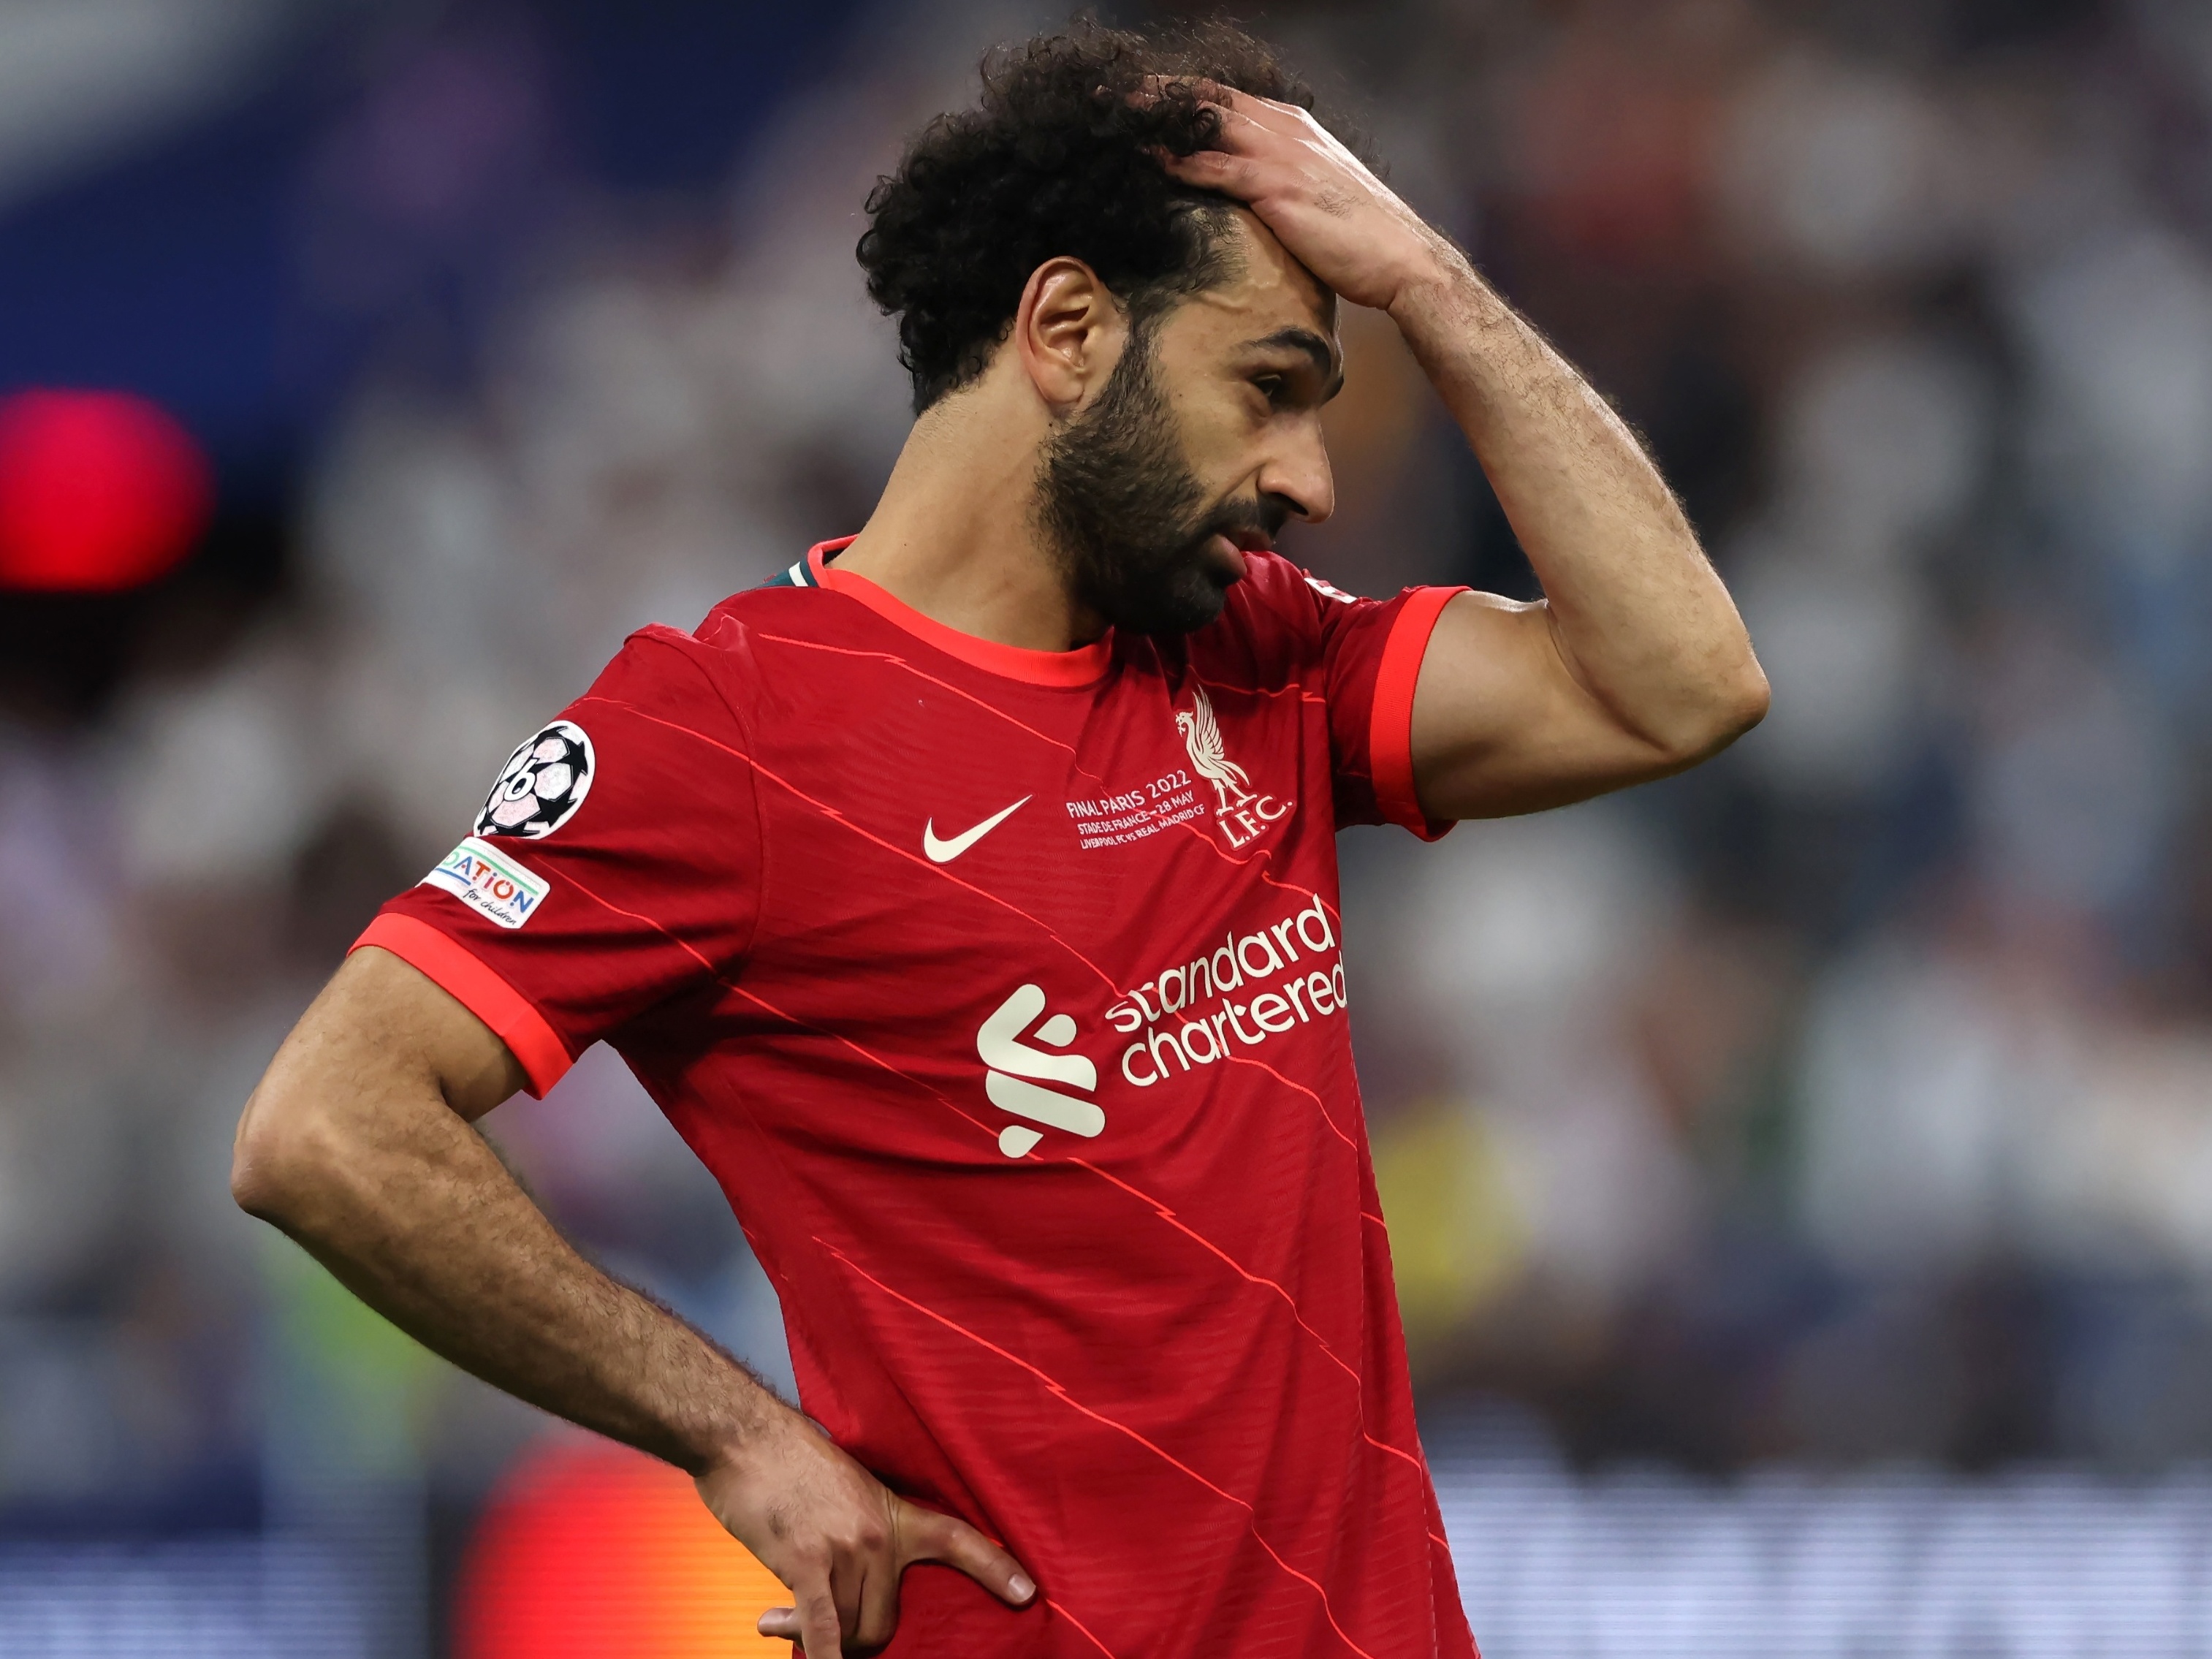 Salah pediu ao Liverpool para ser negociado na próxima temporada